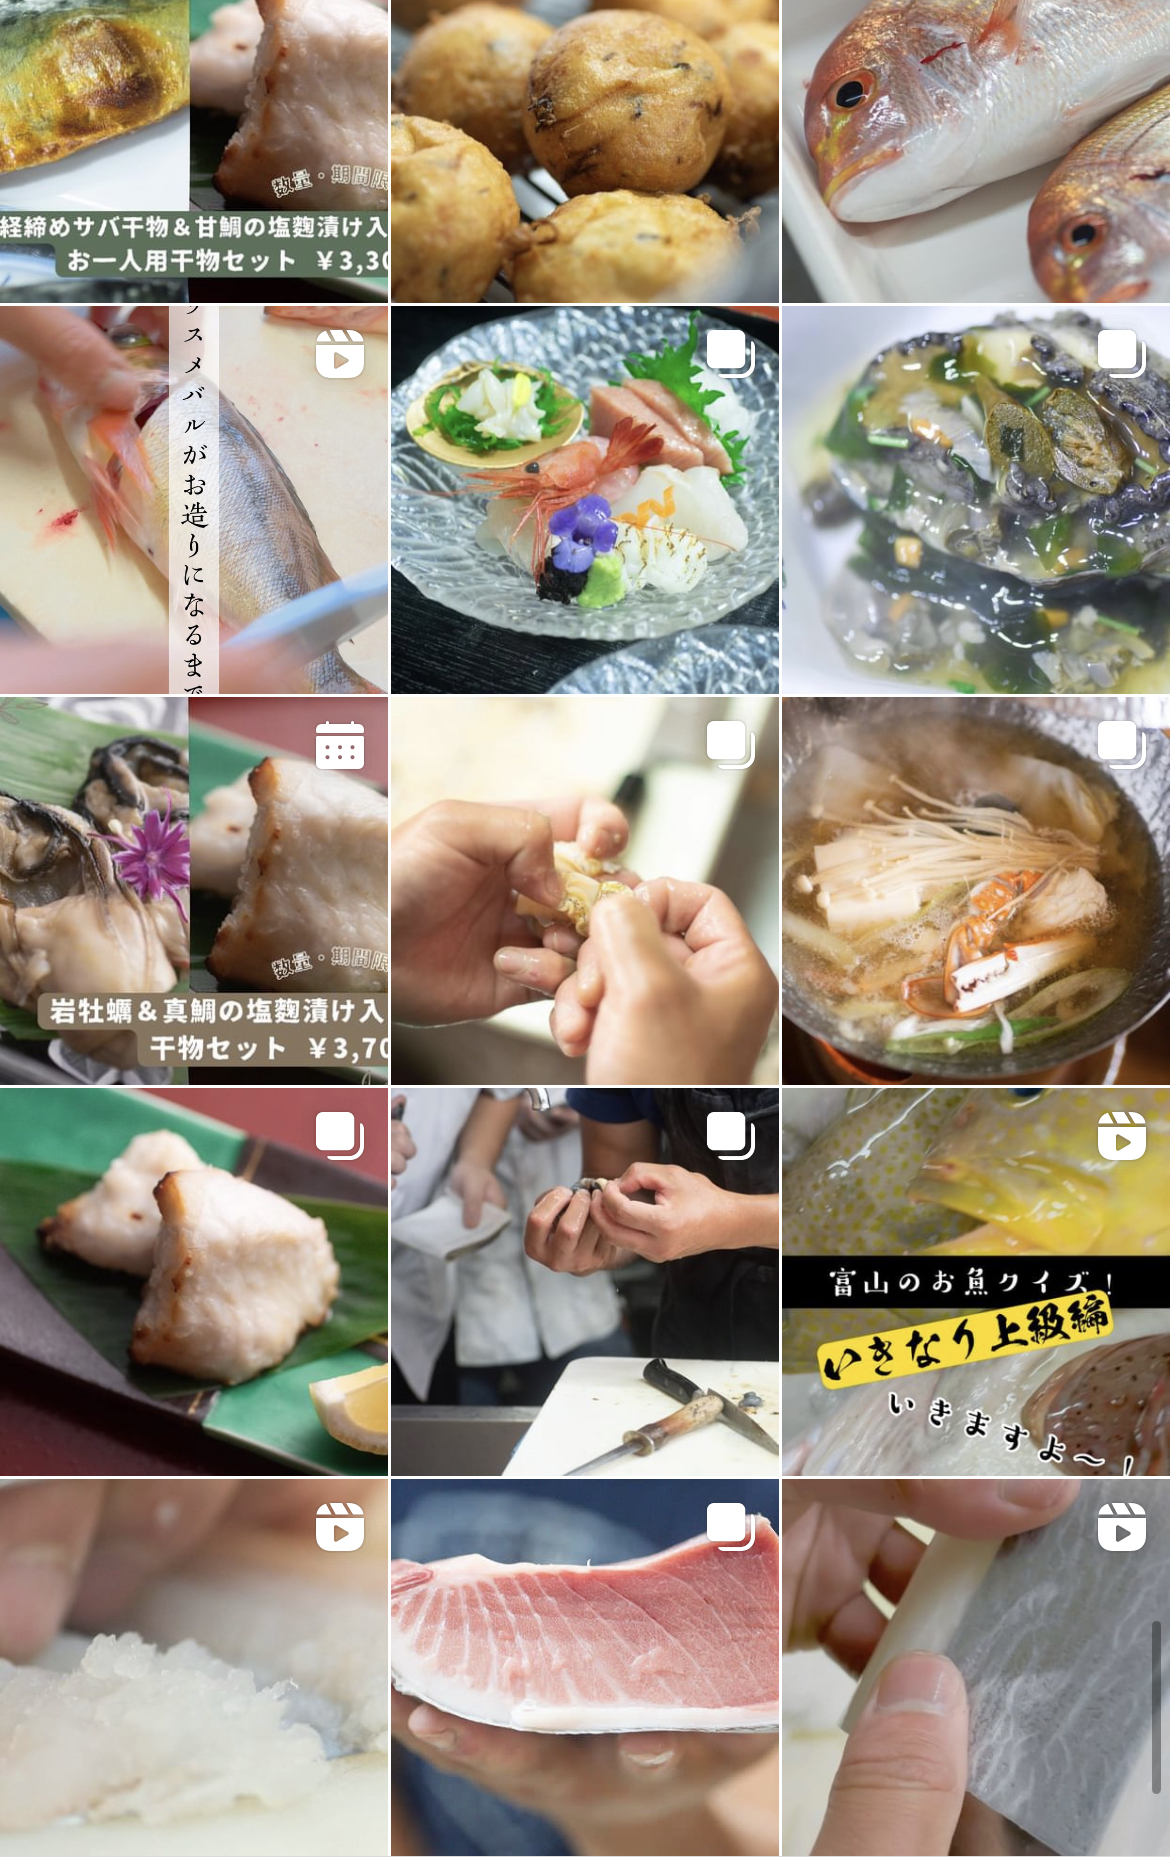 Instagramで料理の最新情報を提供しております★ 最近メールなどで 「最近どんなものが旬ですか